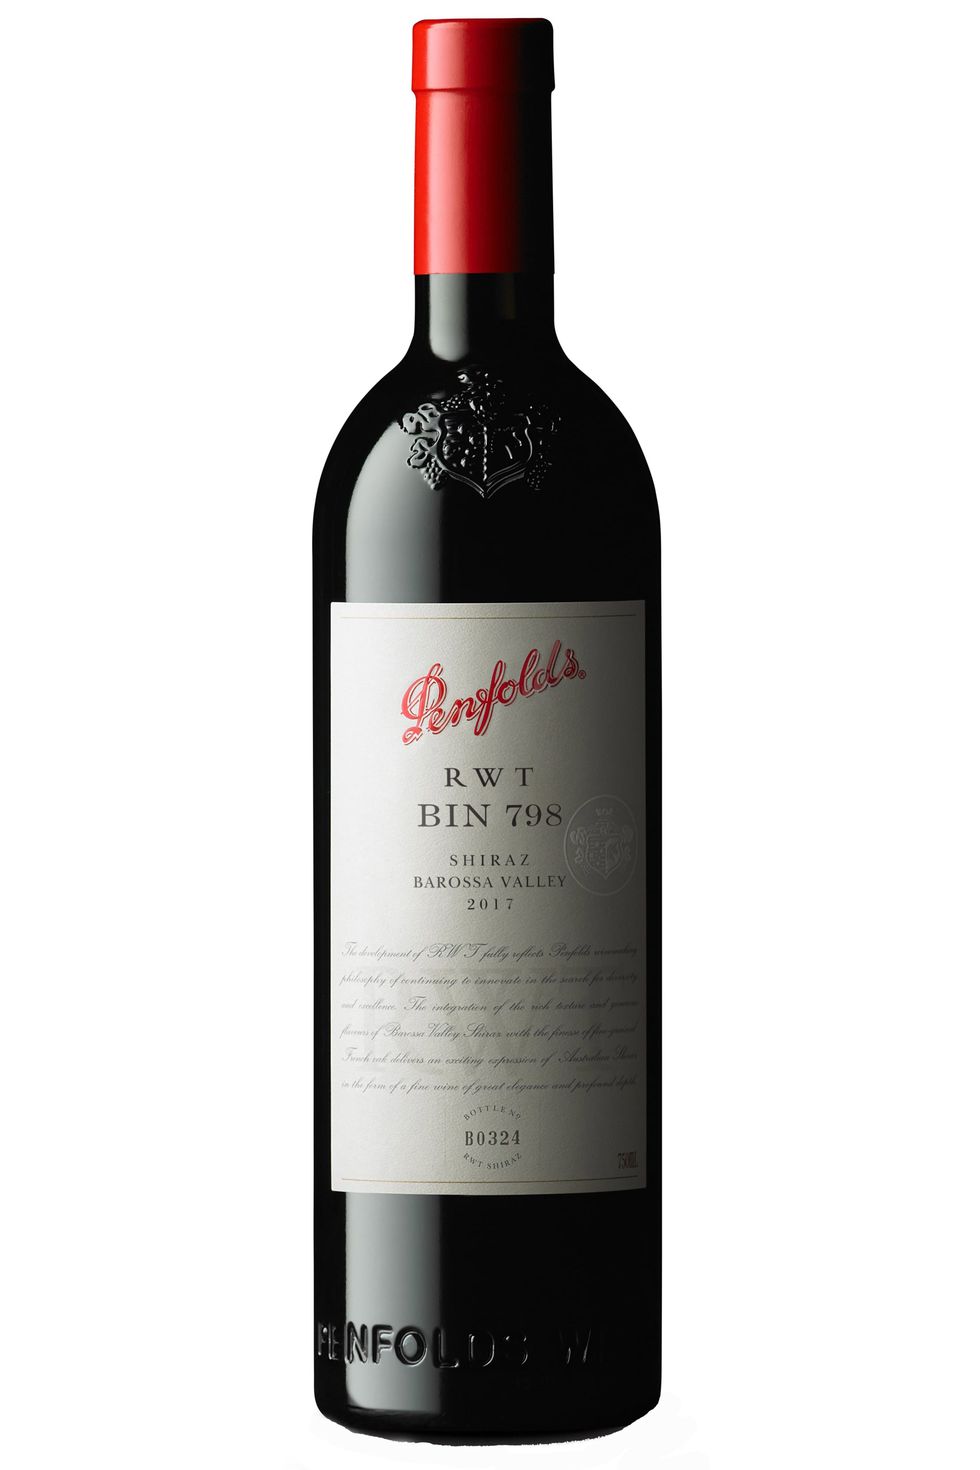 Installere Underholde teleskop 12 Best Red Wines To Drink 2023 - Top Red Wine Bottles to Try